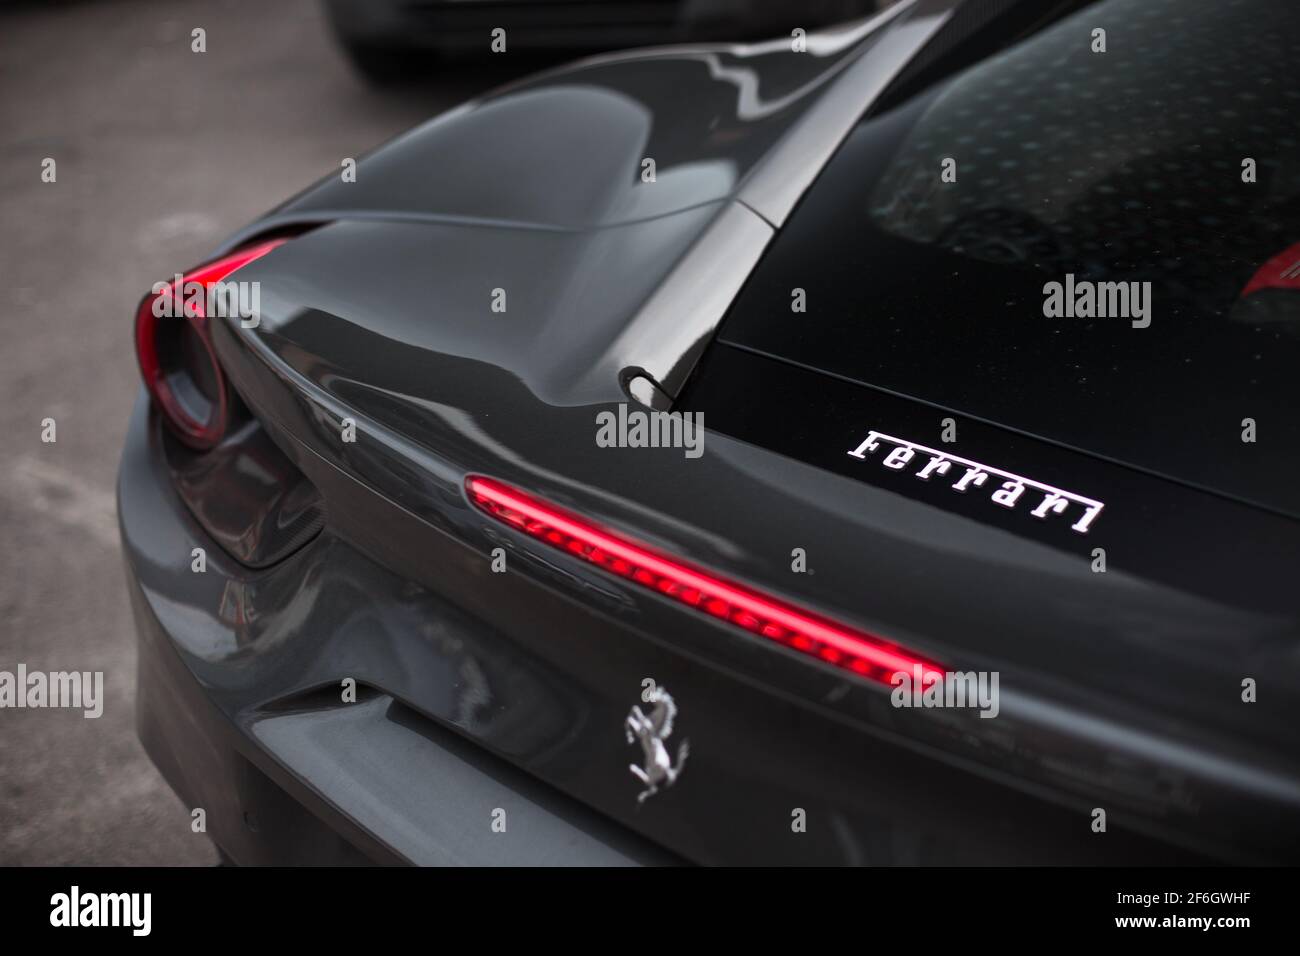 The Ferrari Logo On The Engine Cover On The Rear Of A Grey And Black 2016 Ferrari 488 GTB Stock Photo